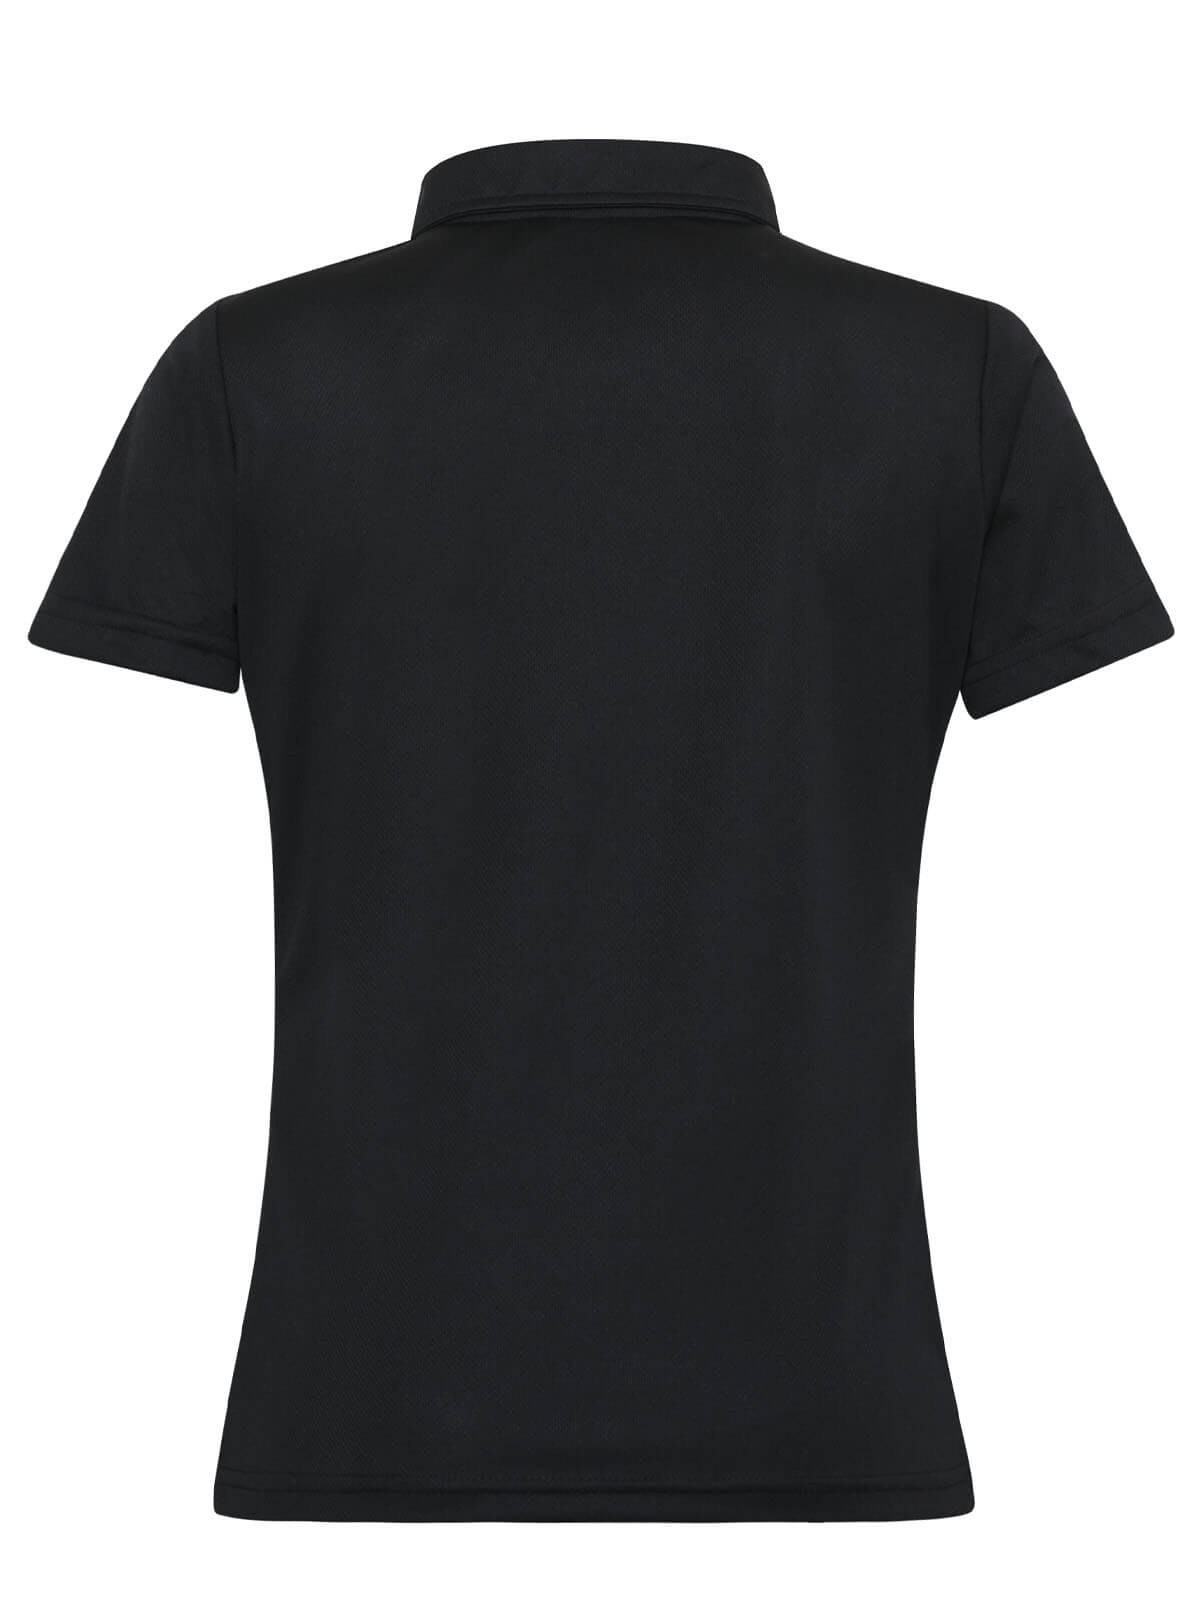 P900 black polo shirt for women rear view